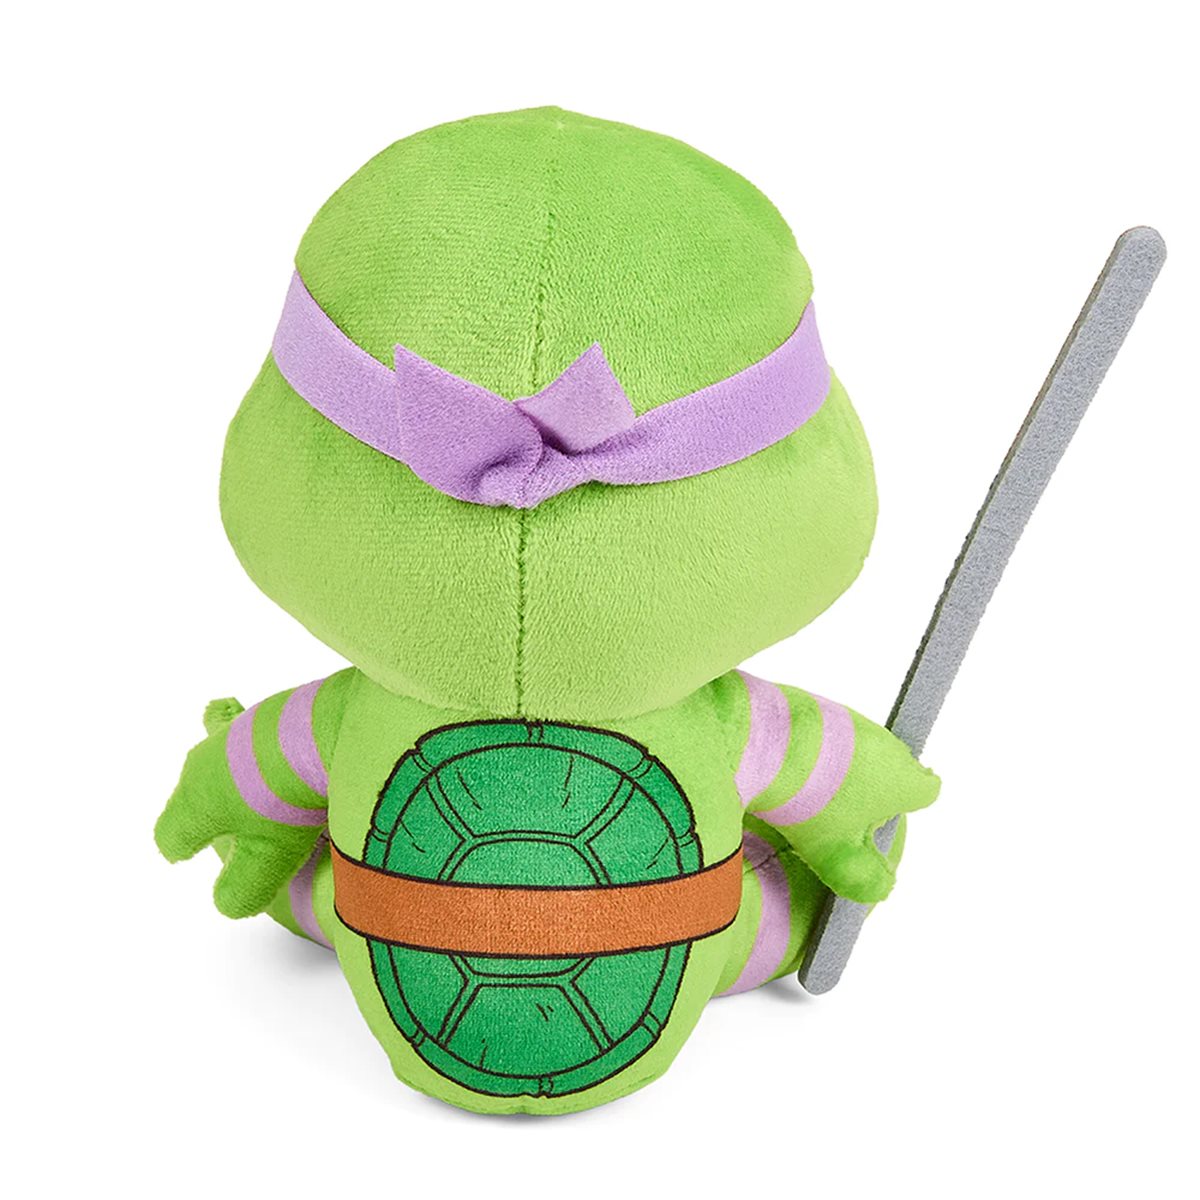 Teenage Mutant Ninja Turtles Donatello Junior Mocchi Plush 6